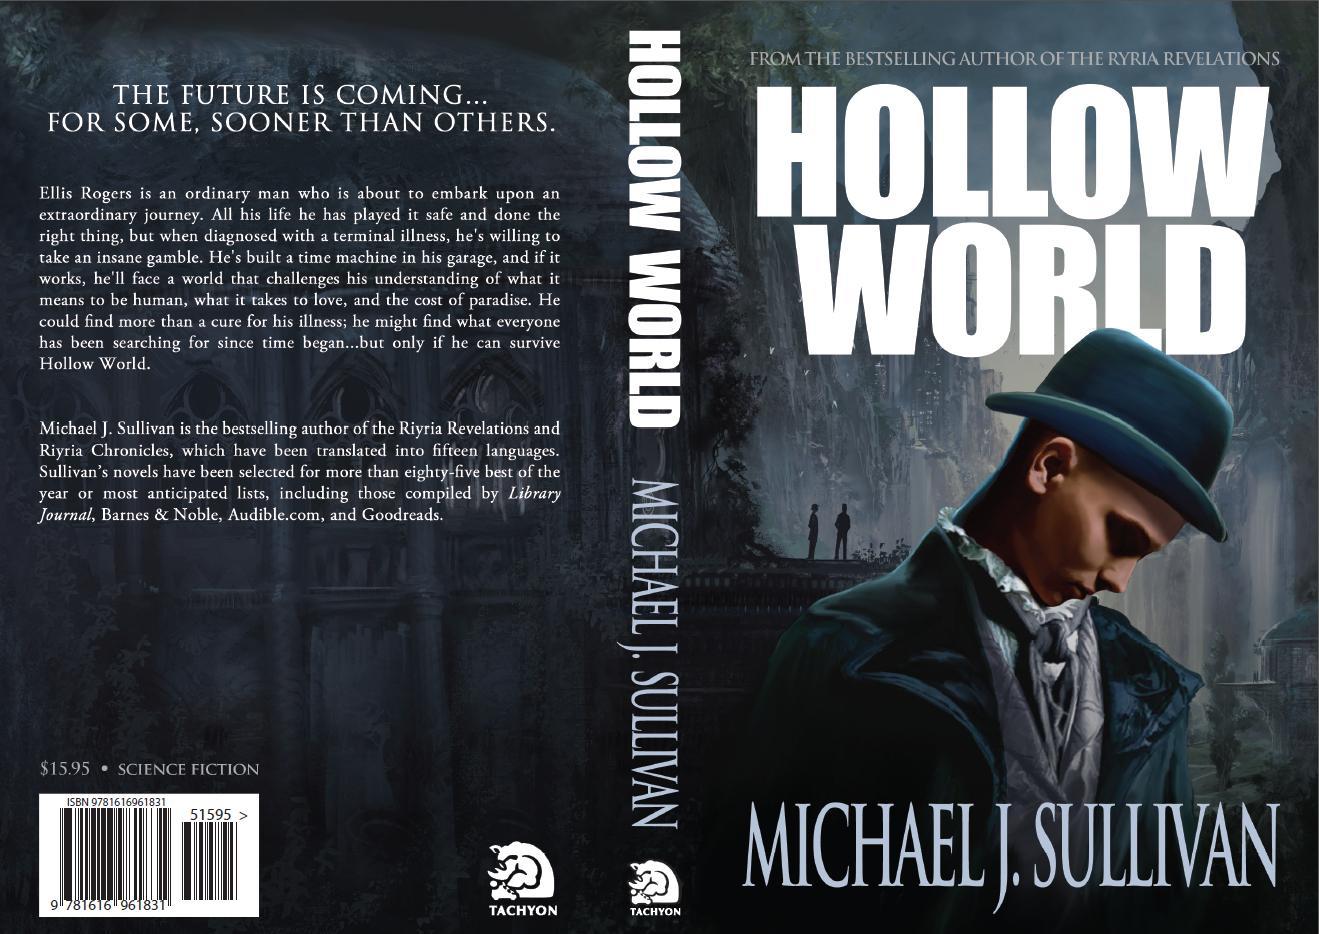 Hollow World by Michael J. Sullivan